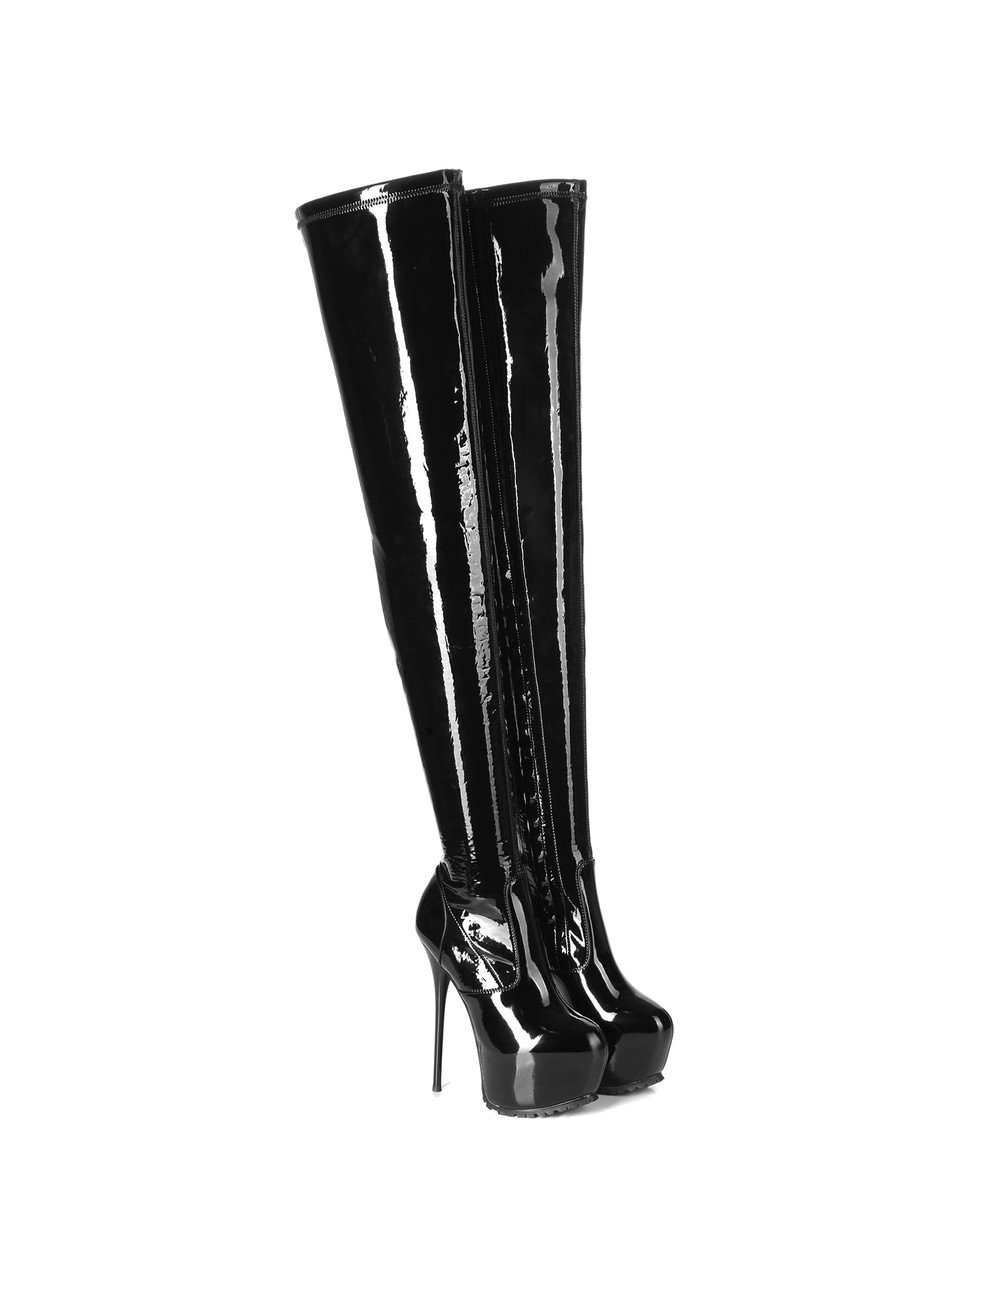 Black shiny thigh boots Giaro Vida 16cm heels profile - Shoebidoo Shoes ...